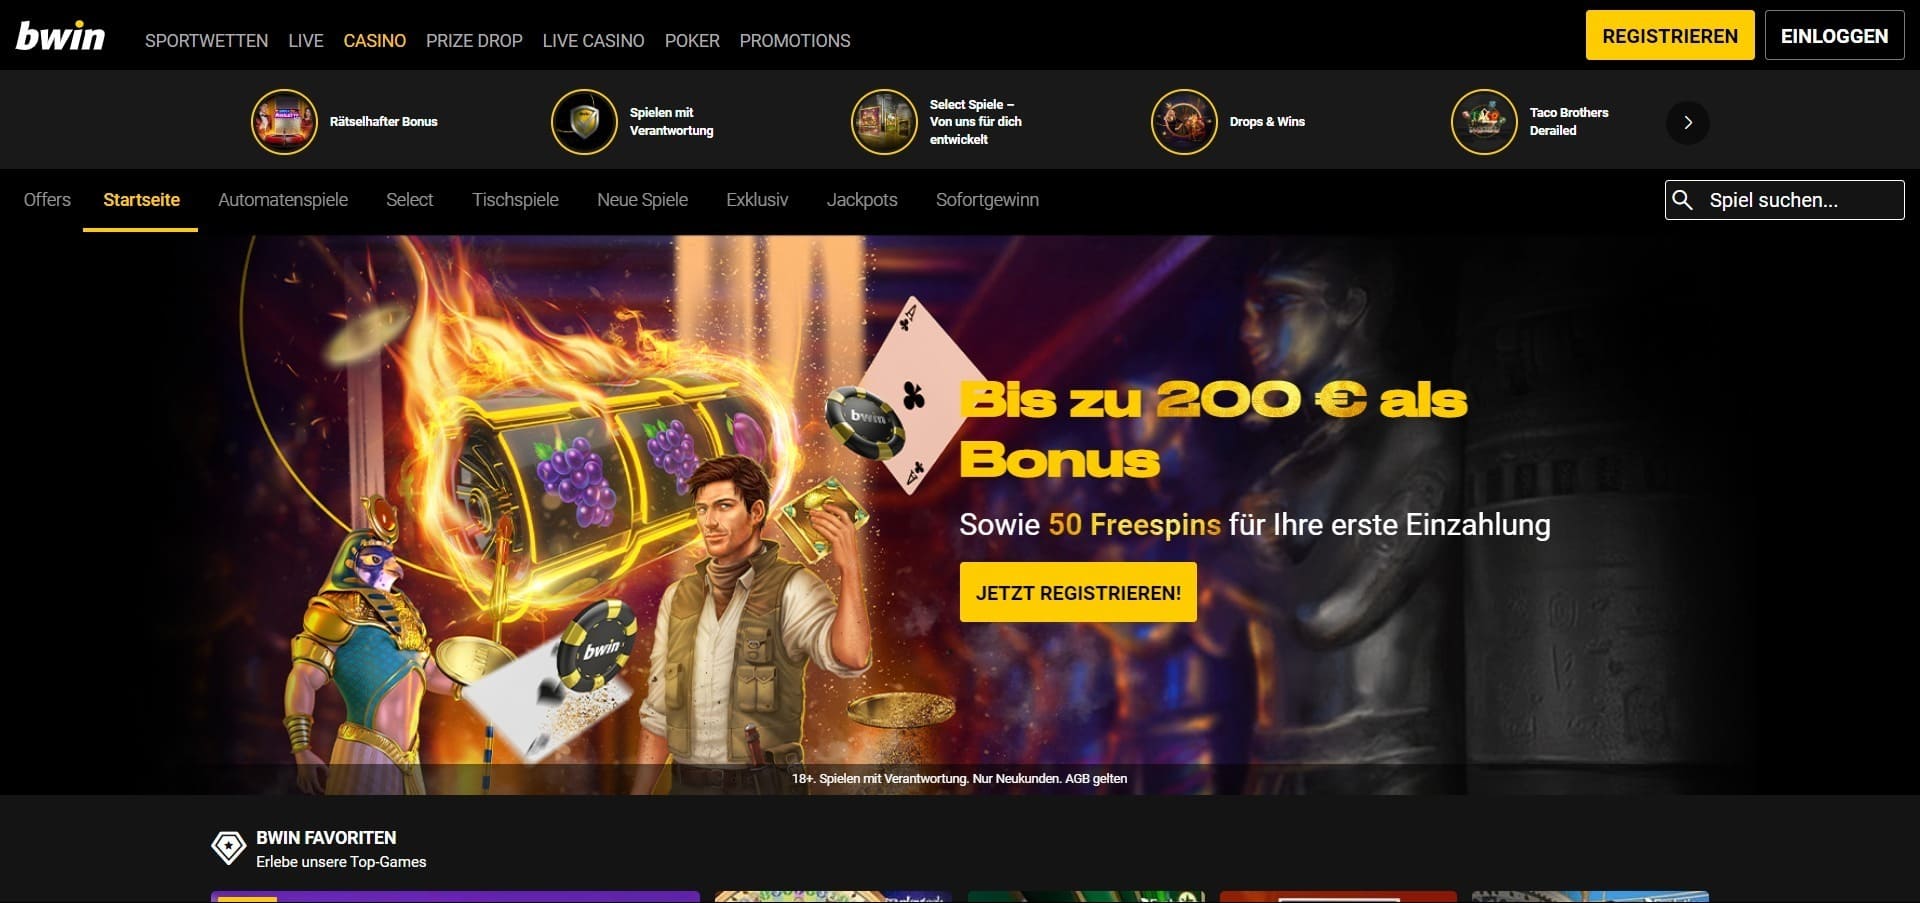 Offizielle Website der Bwin Casino